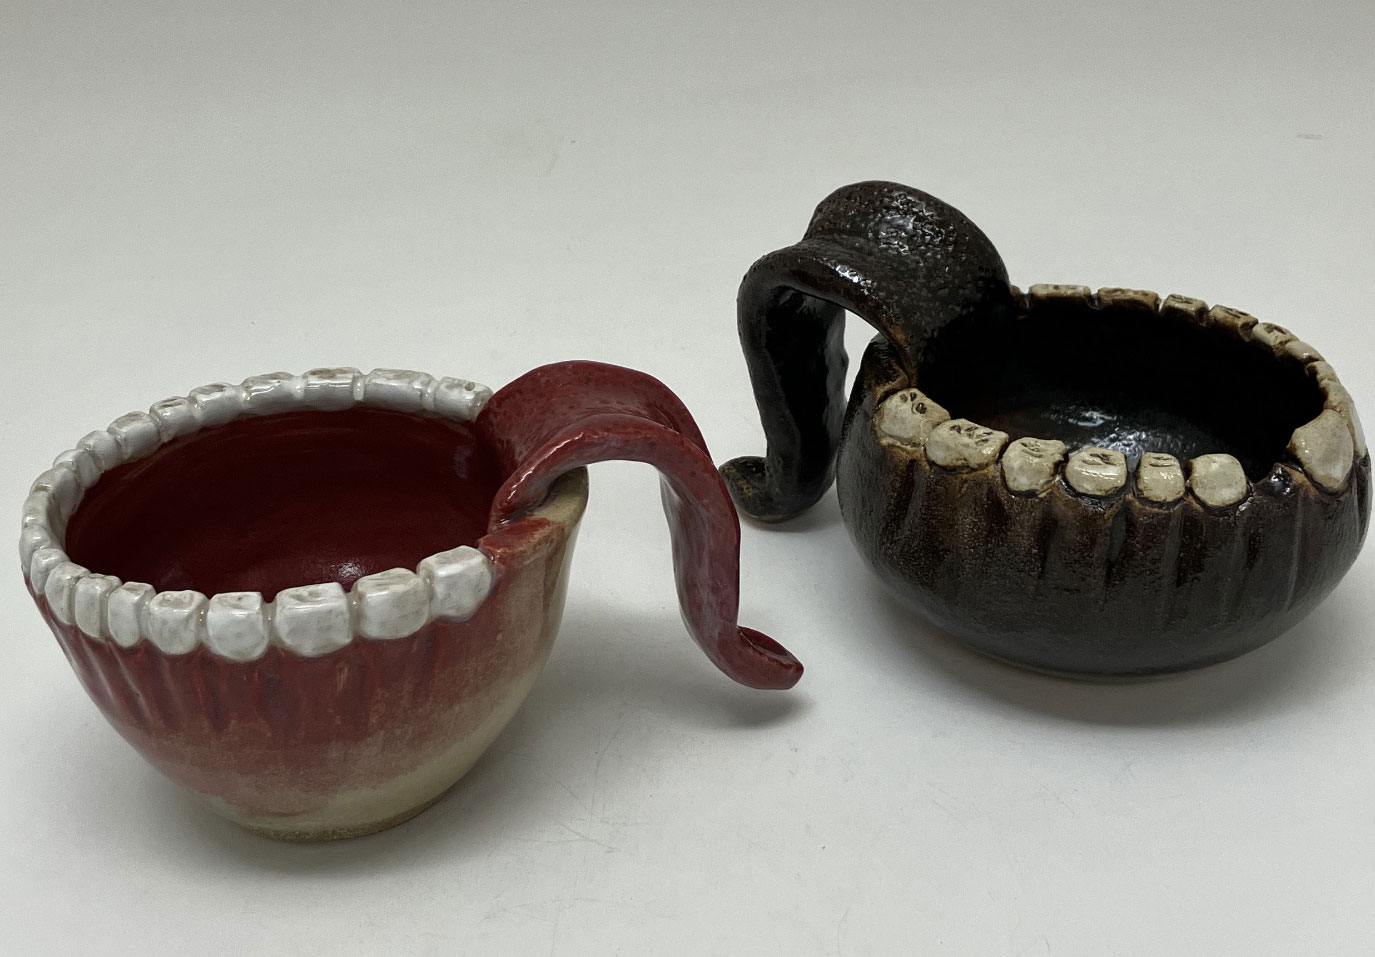 Amelia Brown - Ceramics I